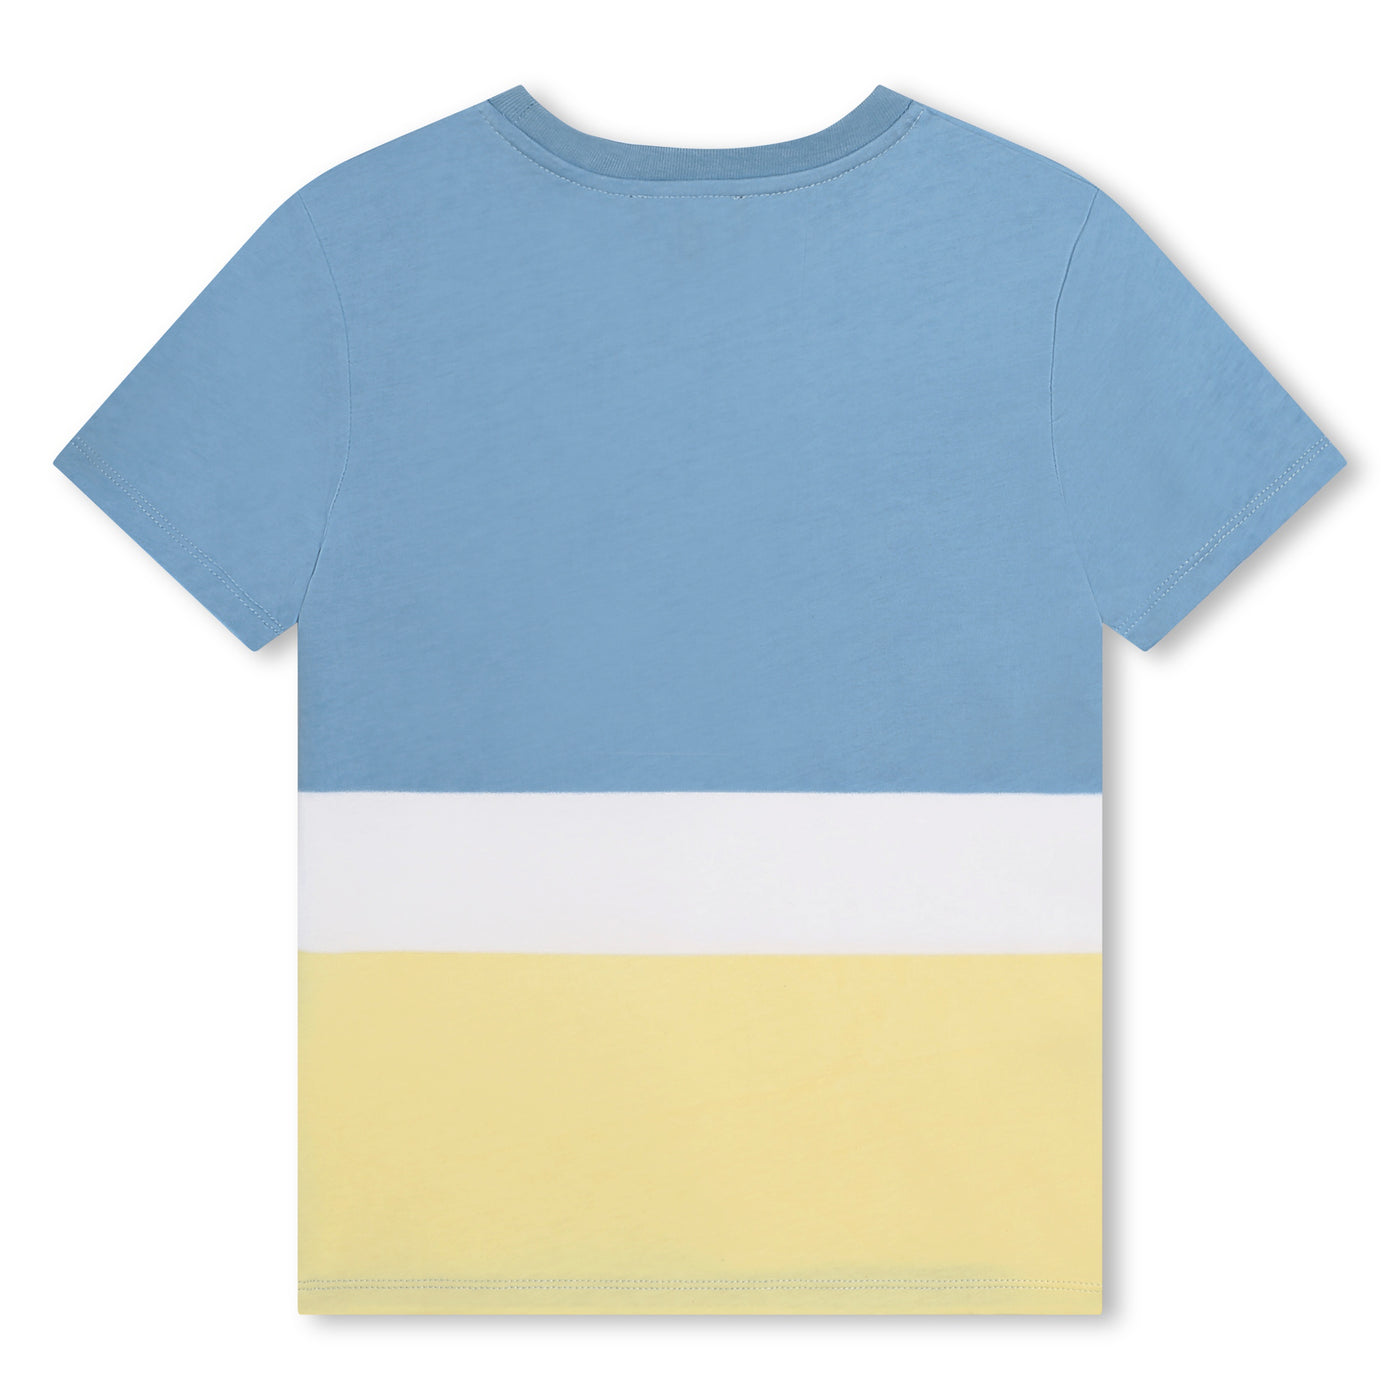 Pale Blue T-shirt by DKNY